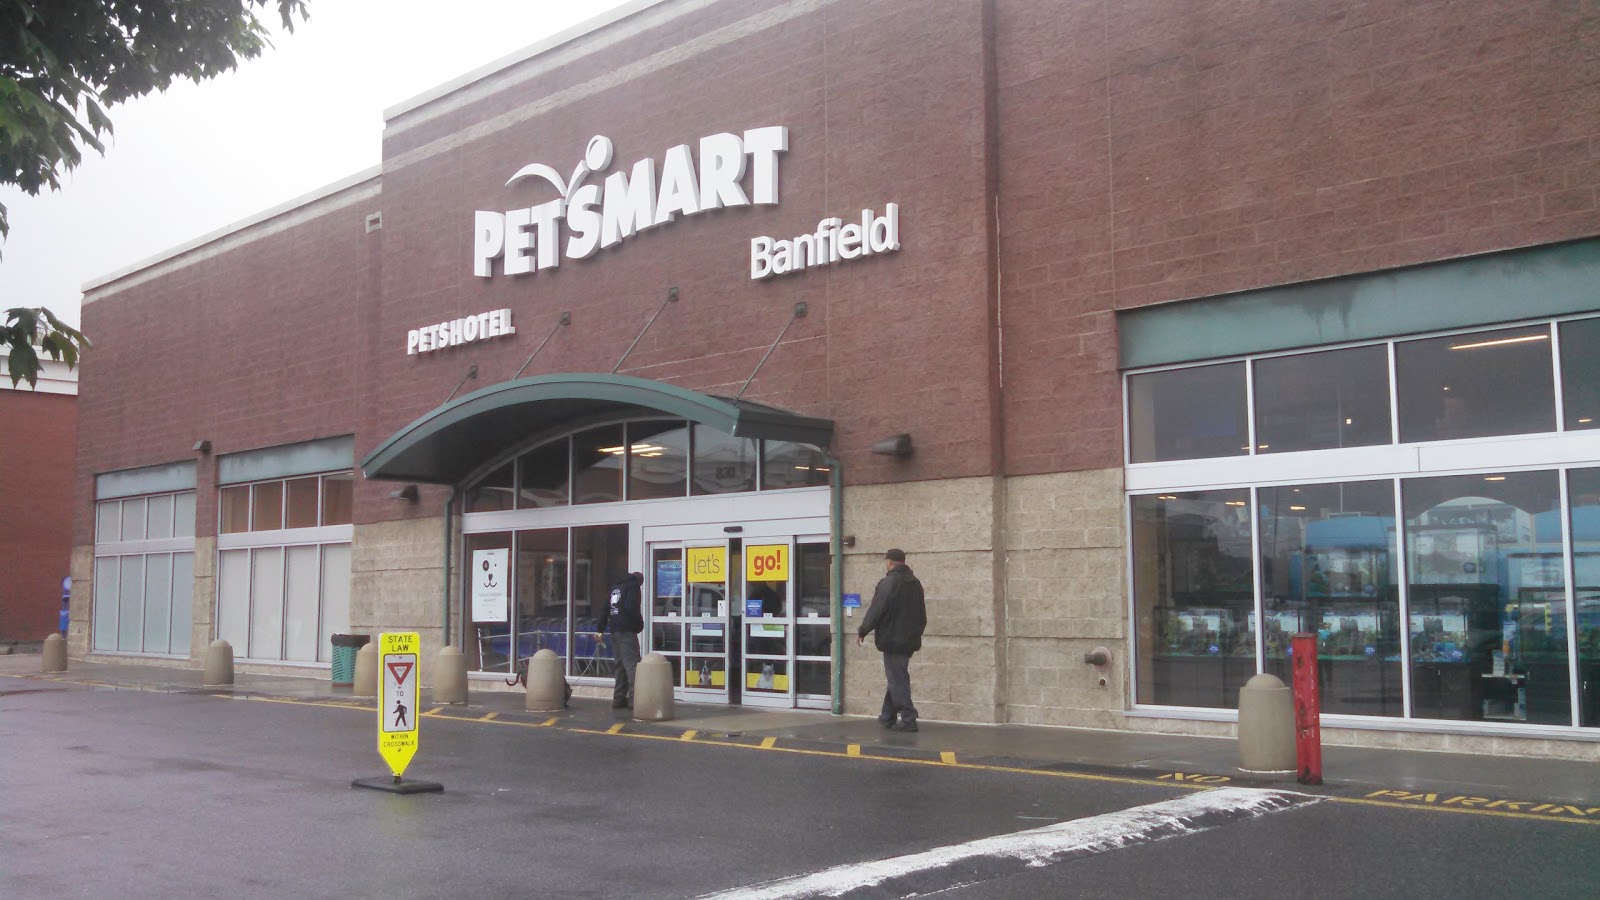 Photo of PetSmart in Pelham Manor City, New York, United States - 1 Picture of Point of interest, Establishment, Store